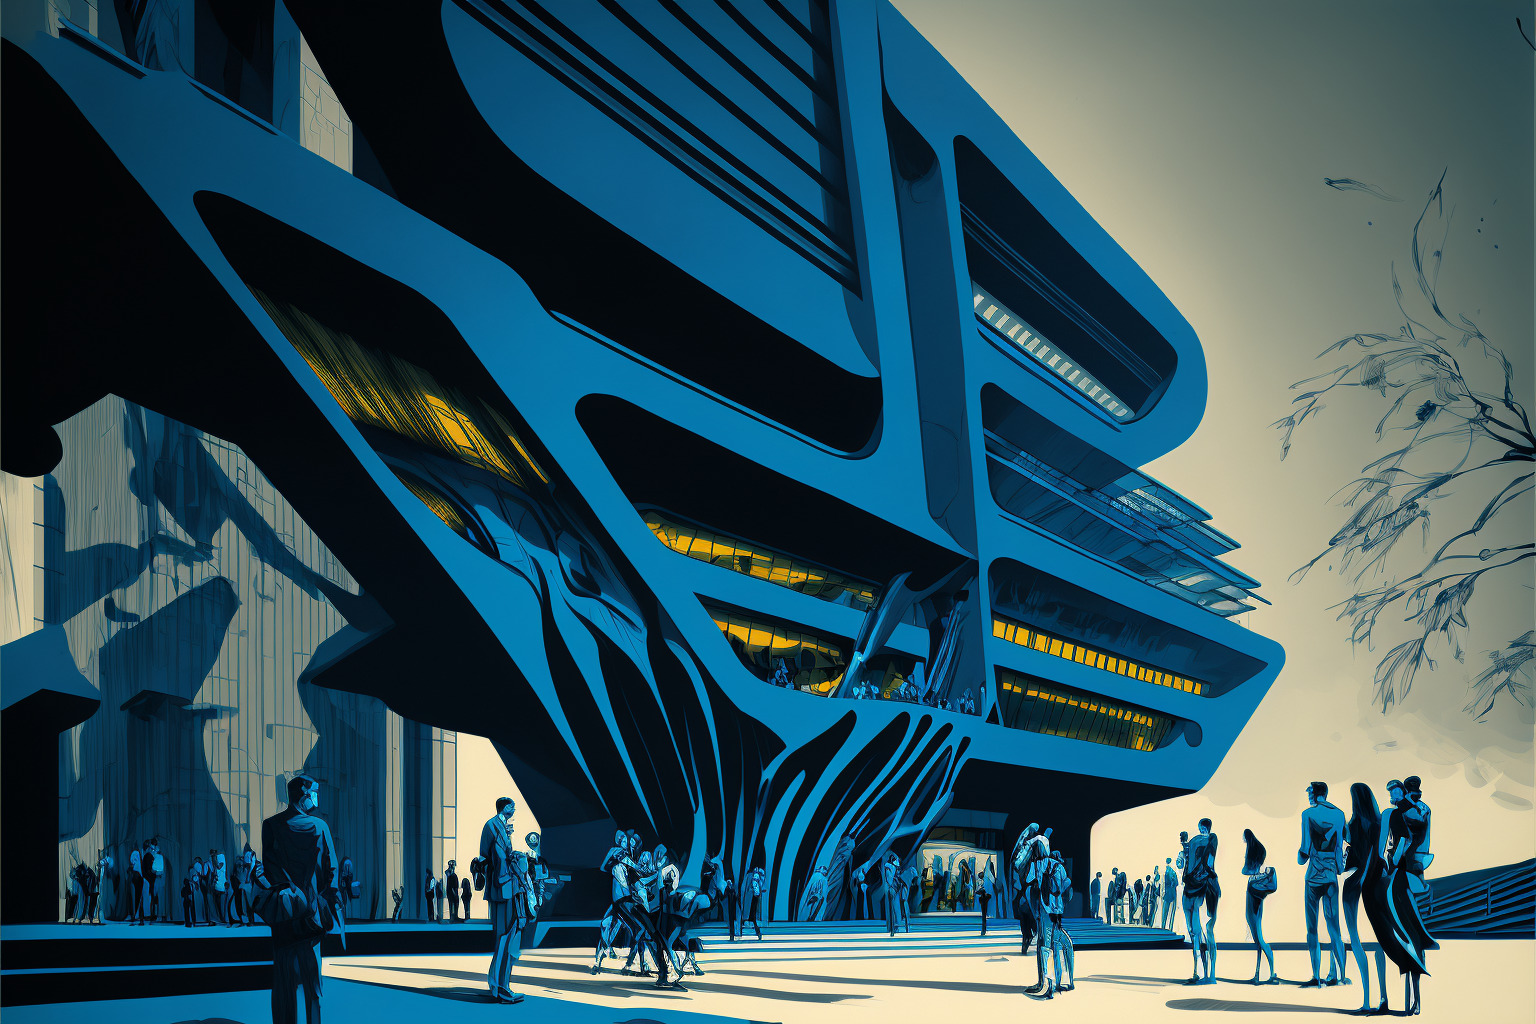 AI generated image of a futuristic building